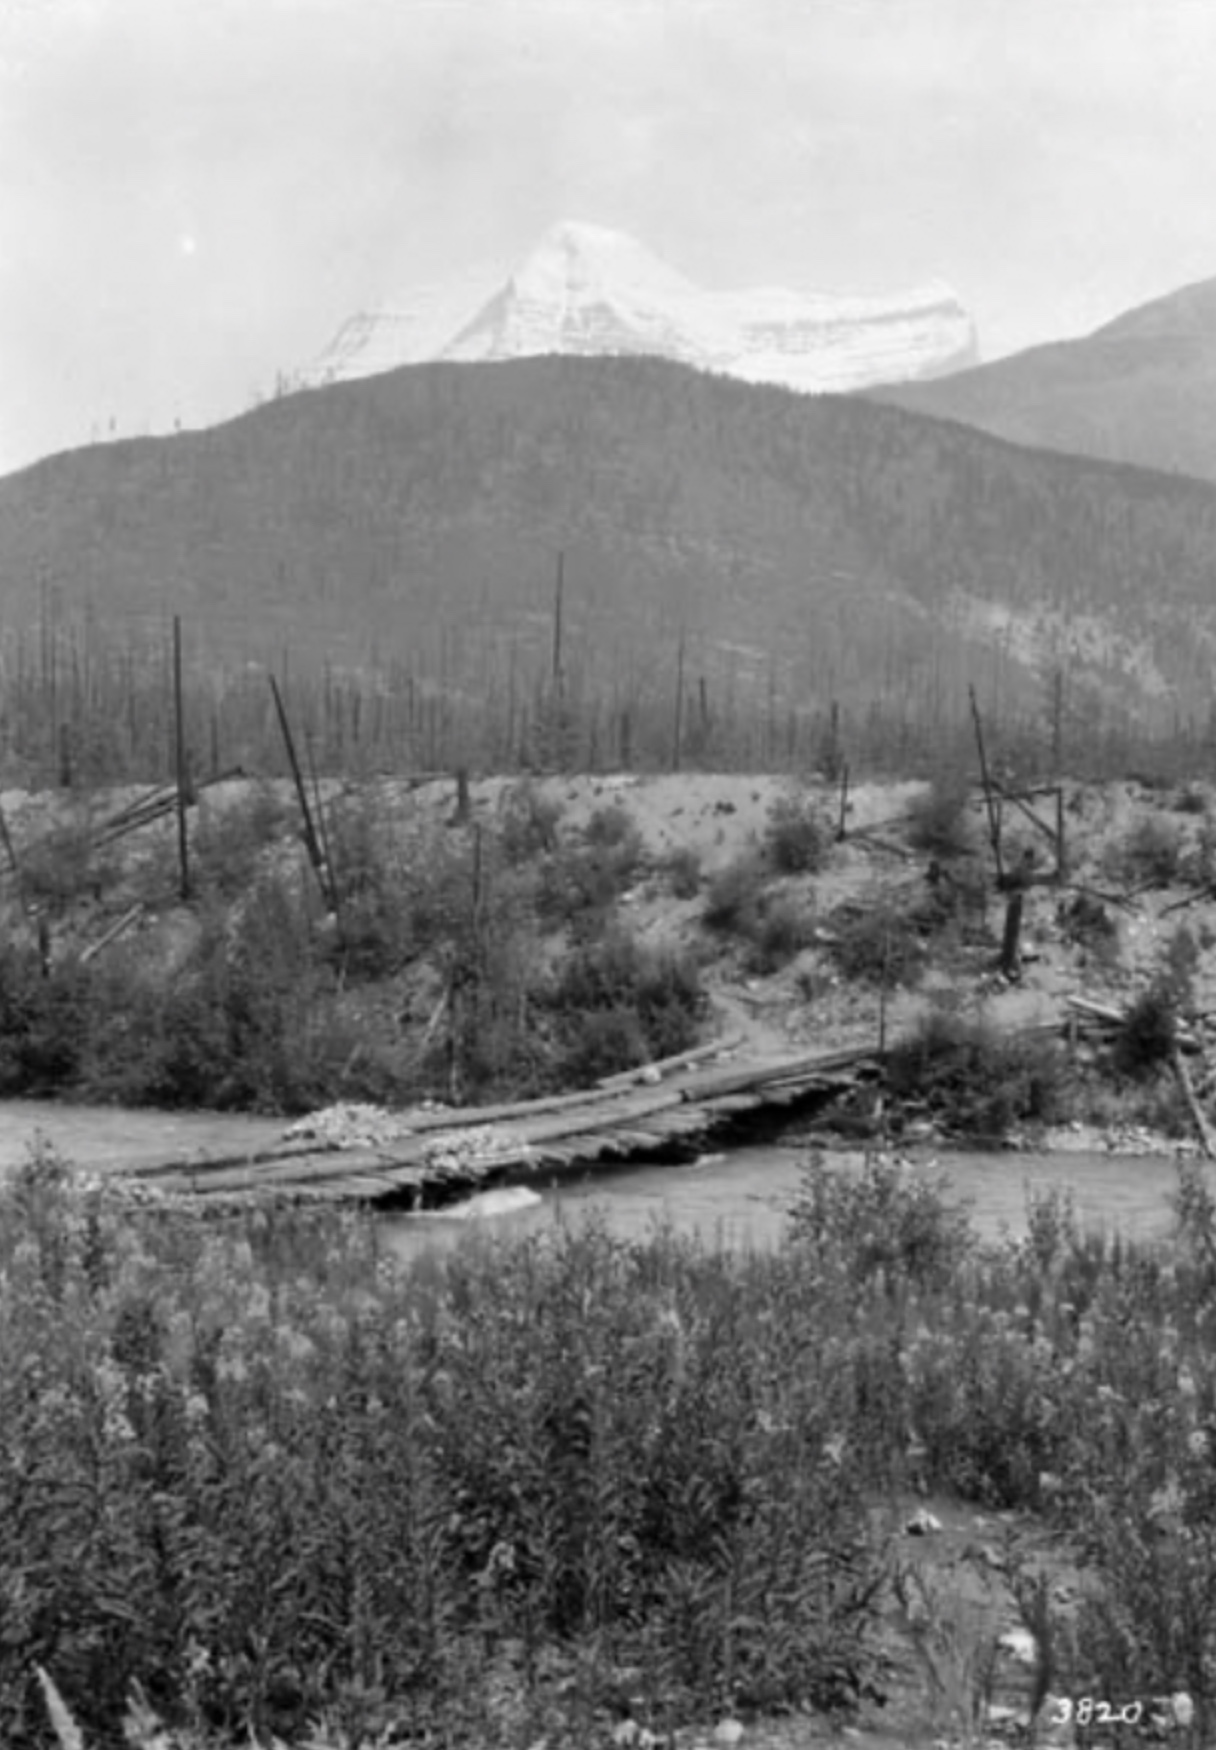 At Hogan's bridge - Mt. Robson in background
William James Topley, 1914